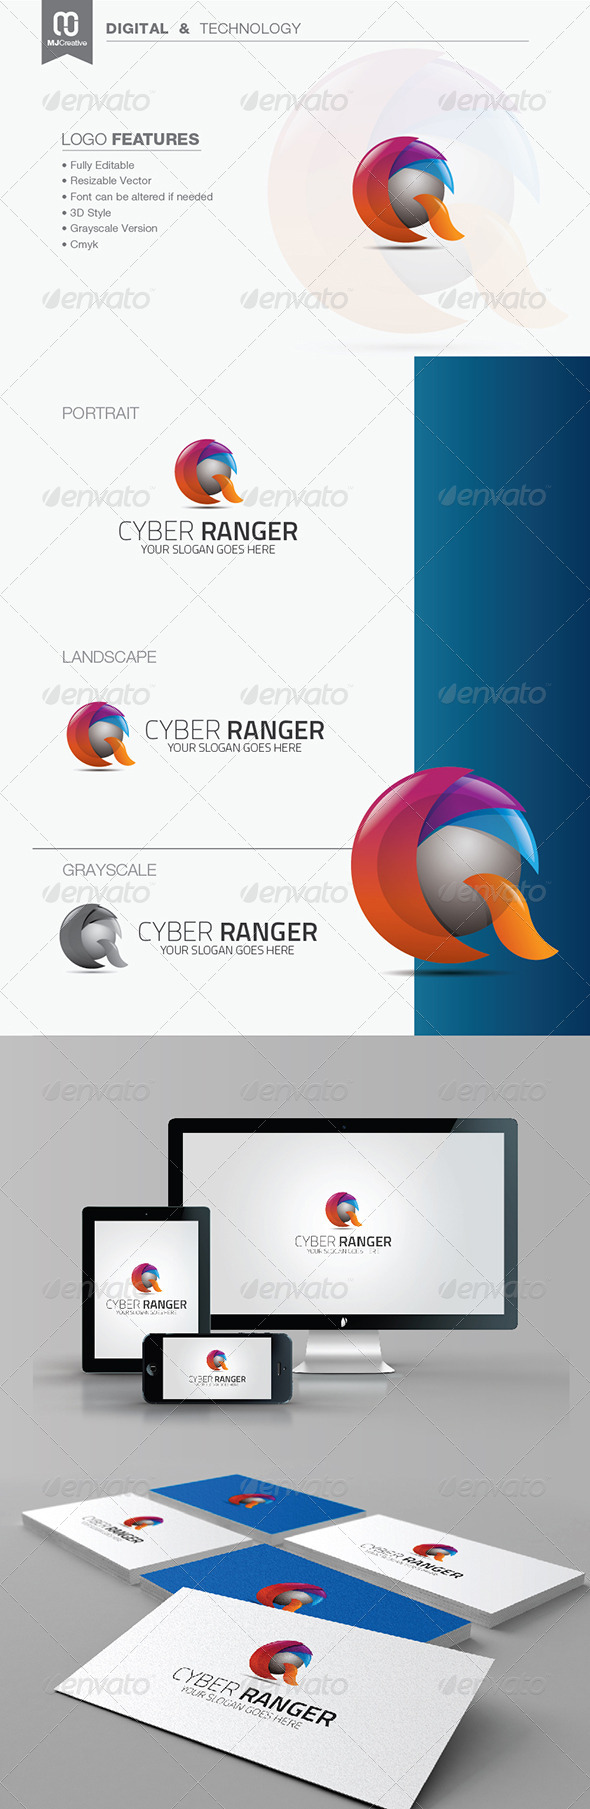 Digital & Technology Logo